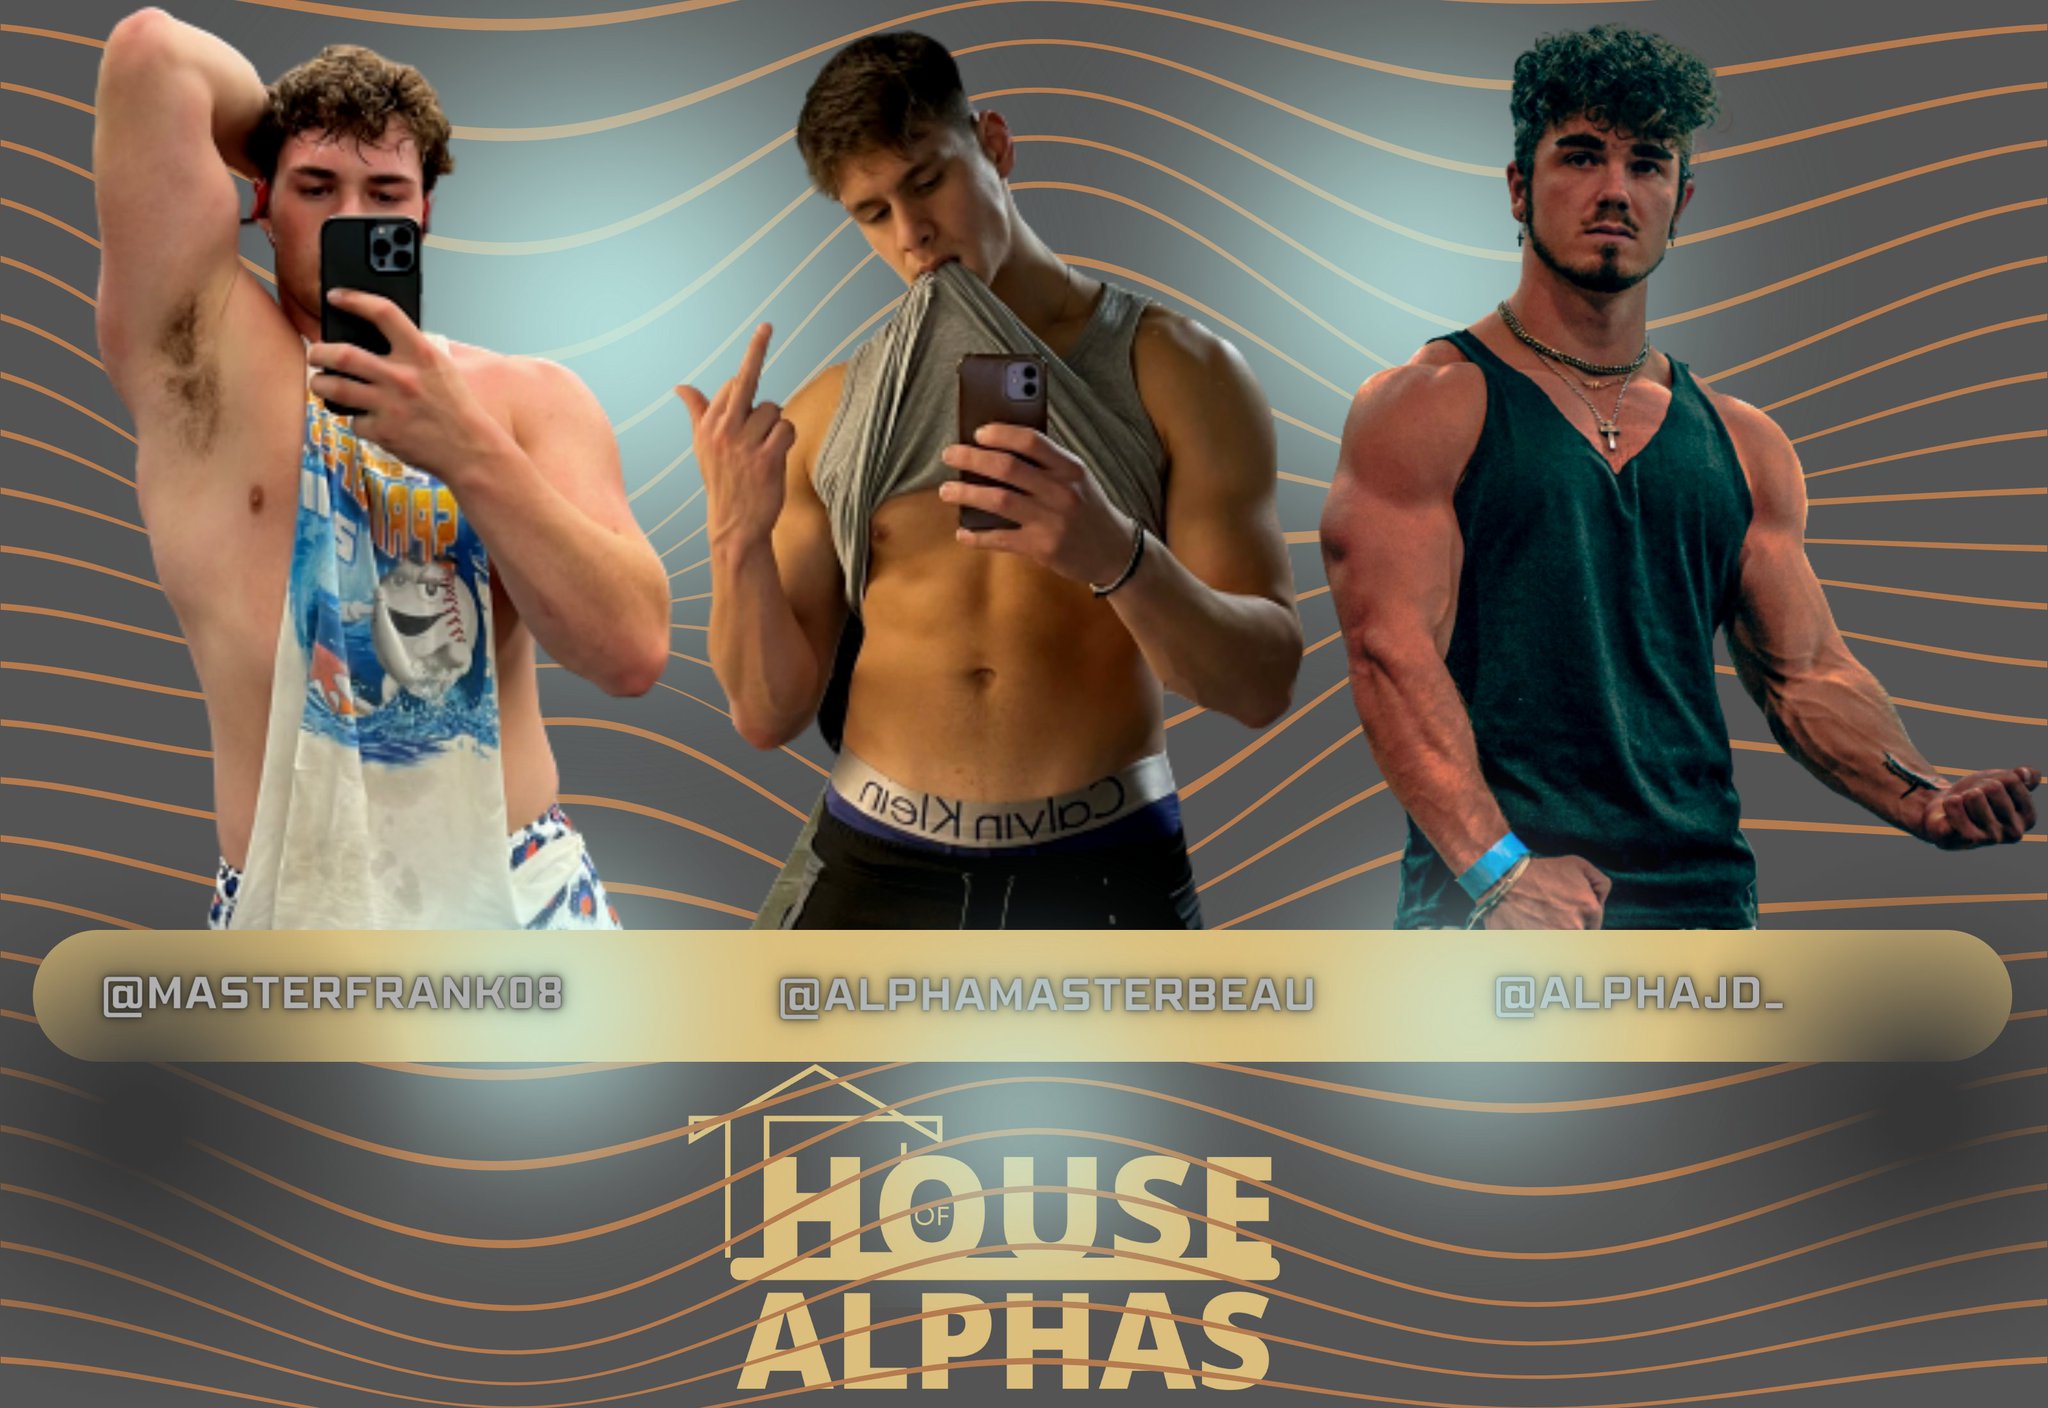 House Of Alphas on X: SEASON 1⃣ #HouseOfAlphas FINAL ❗️ POLL in ONE WEEK @ MasterFrank08 @alphamasterbeau @AlphaJD_ t.co8fN07vgm0G  X